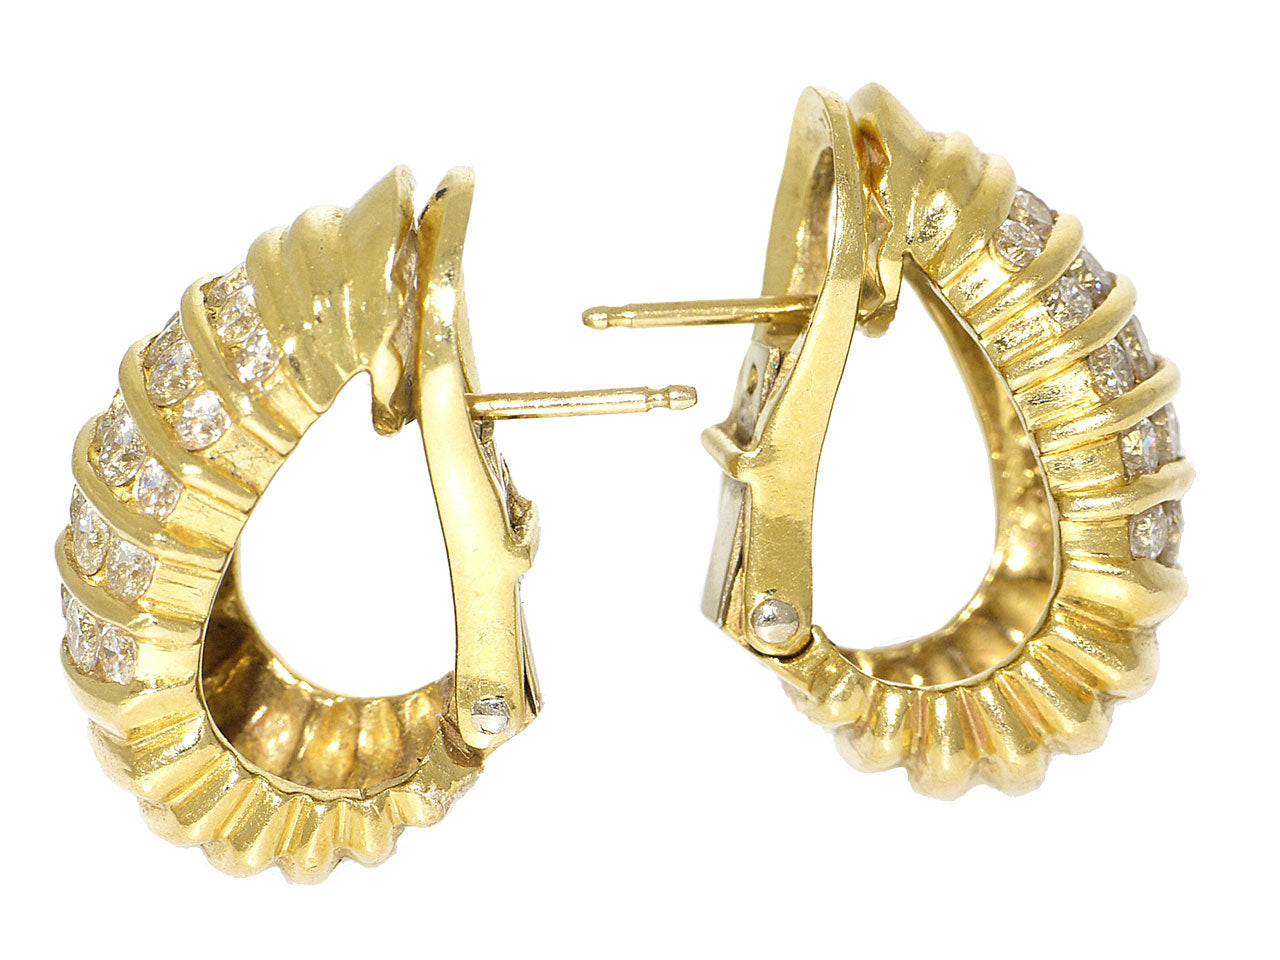 Yellow gold Cartier earrings, 